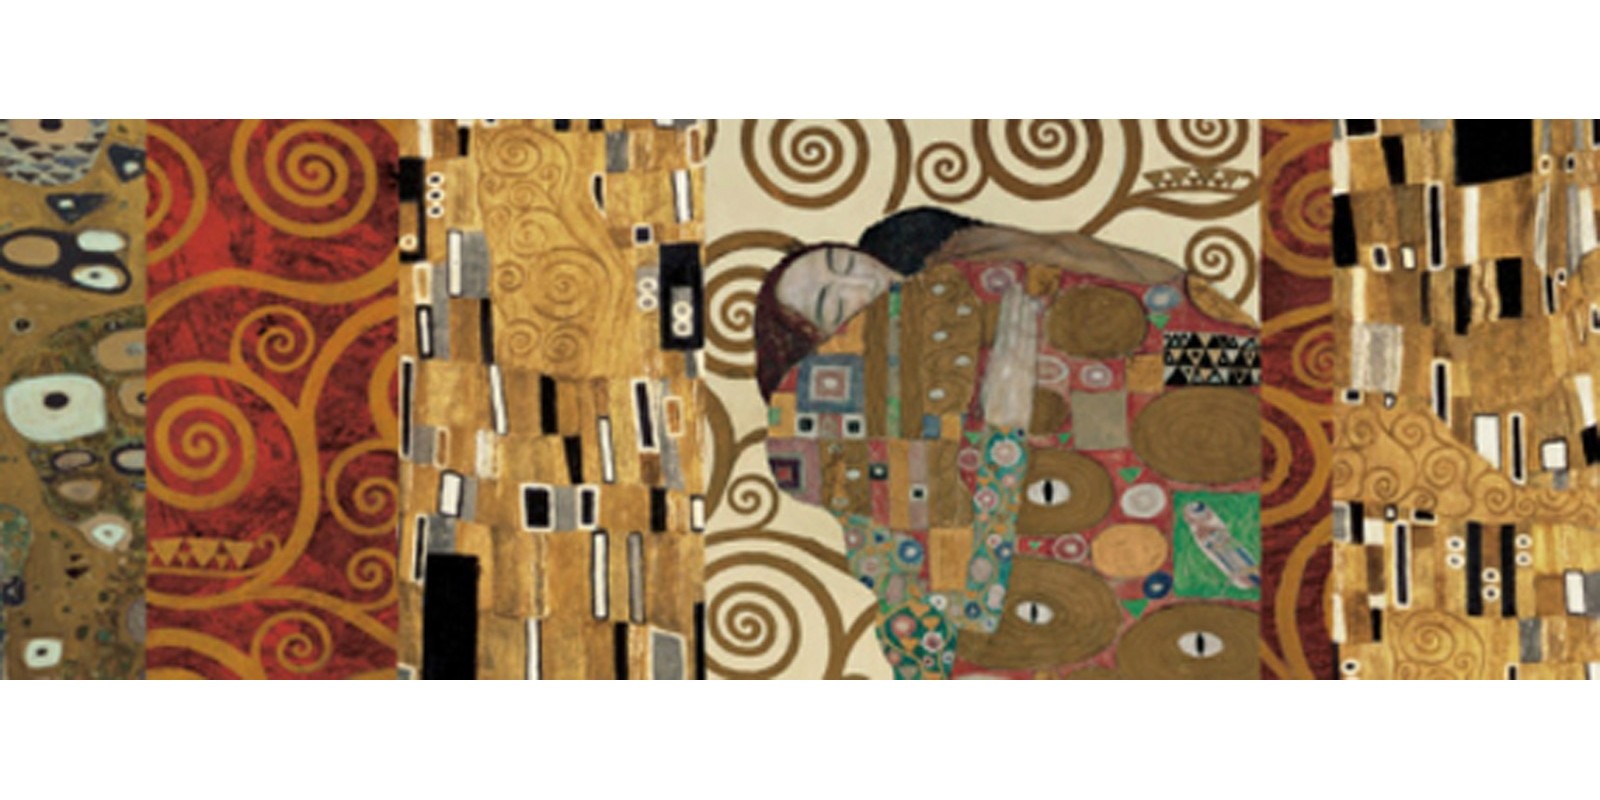 Gustav Klimt - Klimt Deco (Fulfillment)